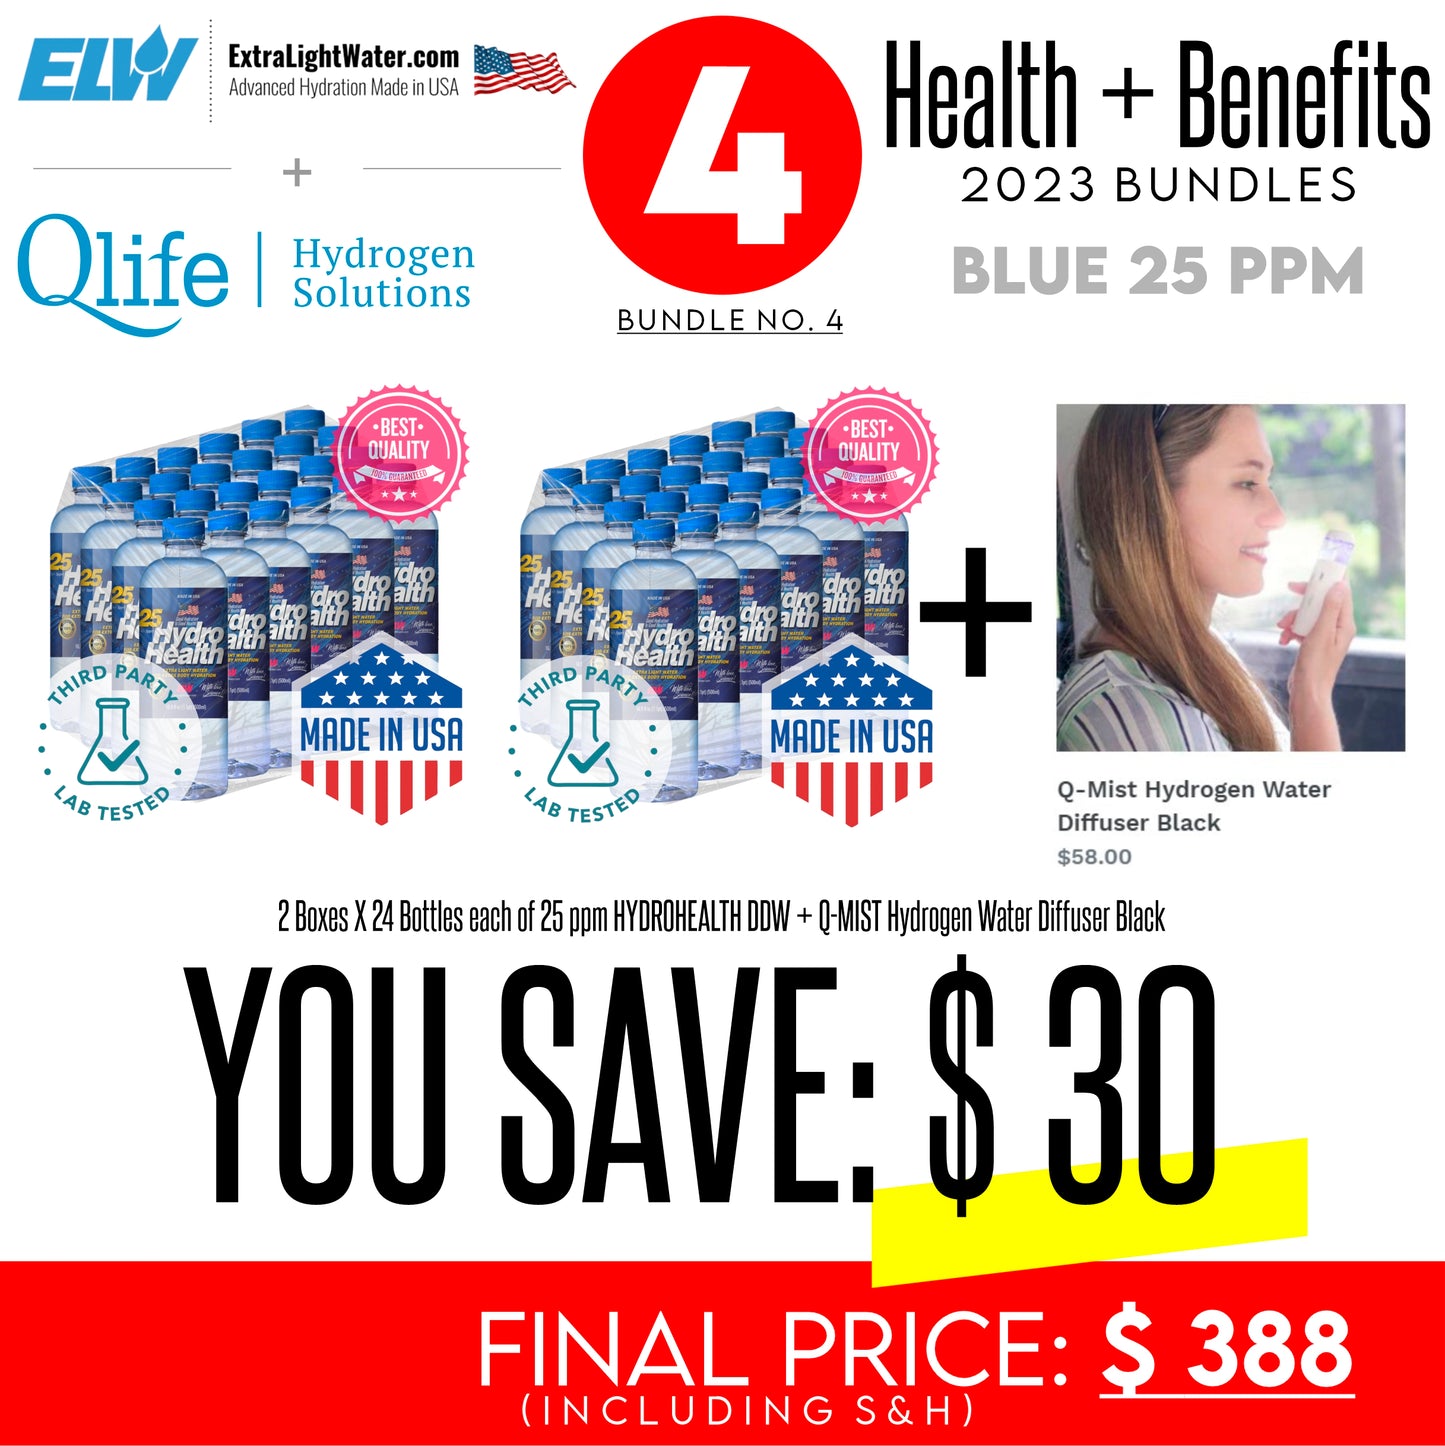 ELW-QMIST BLACK-BUNDLE-25 (2 boxes of 25 ppm water and 1 x Q-Mist Hydrogen Water Diffuser Black)-Save $30. The price includes S&H.-Save $30. The price includes S&H.